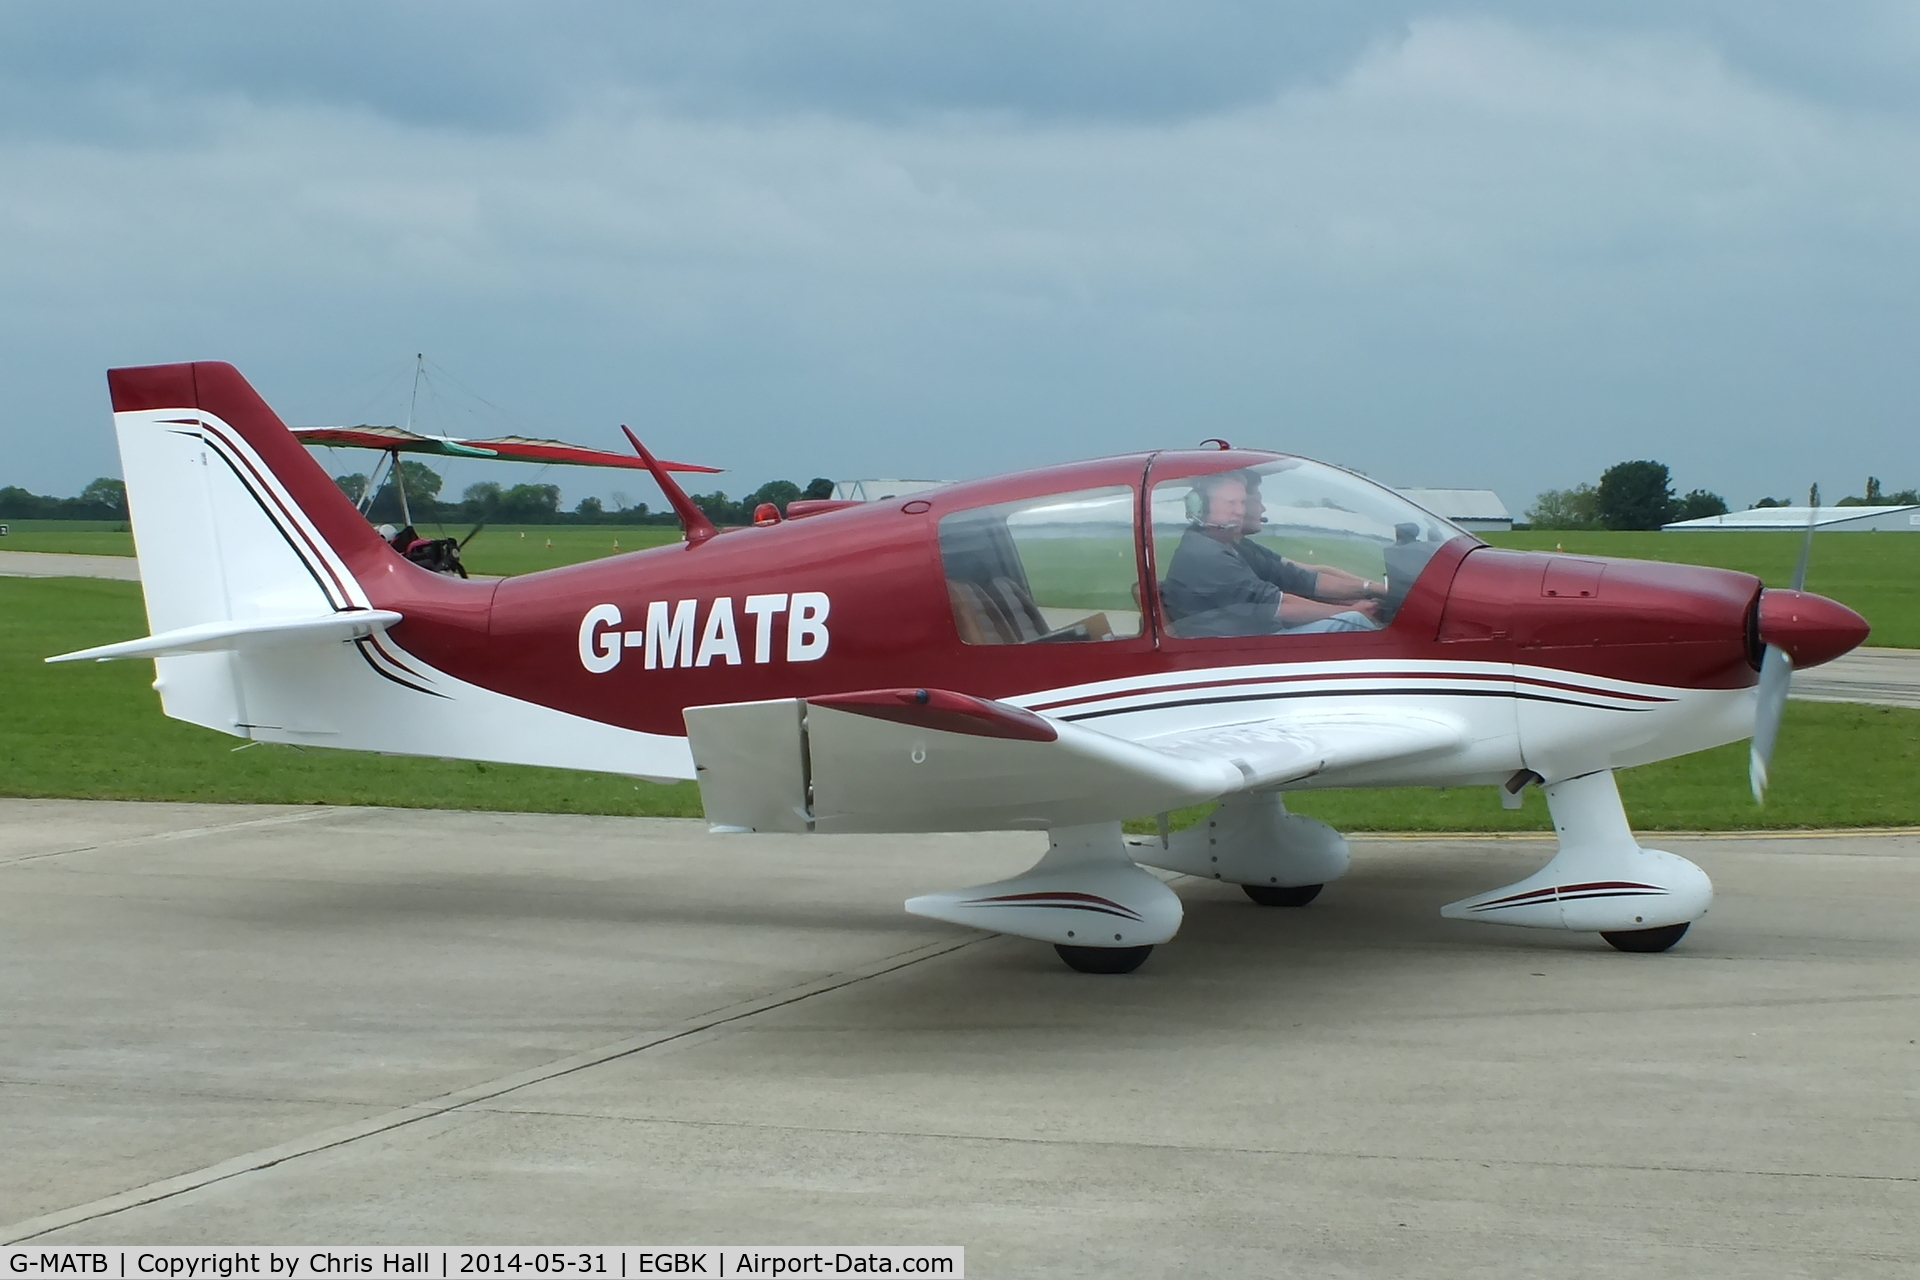 G-MATB, 1972 Robin DR-400-160 Chevalier C/N 735, at AeroExpo 2014